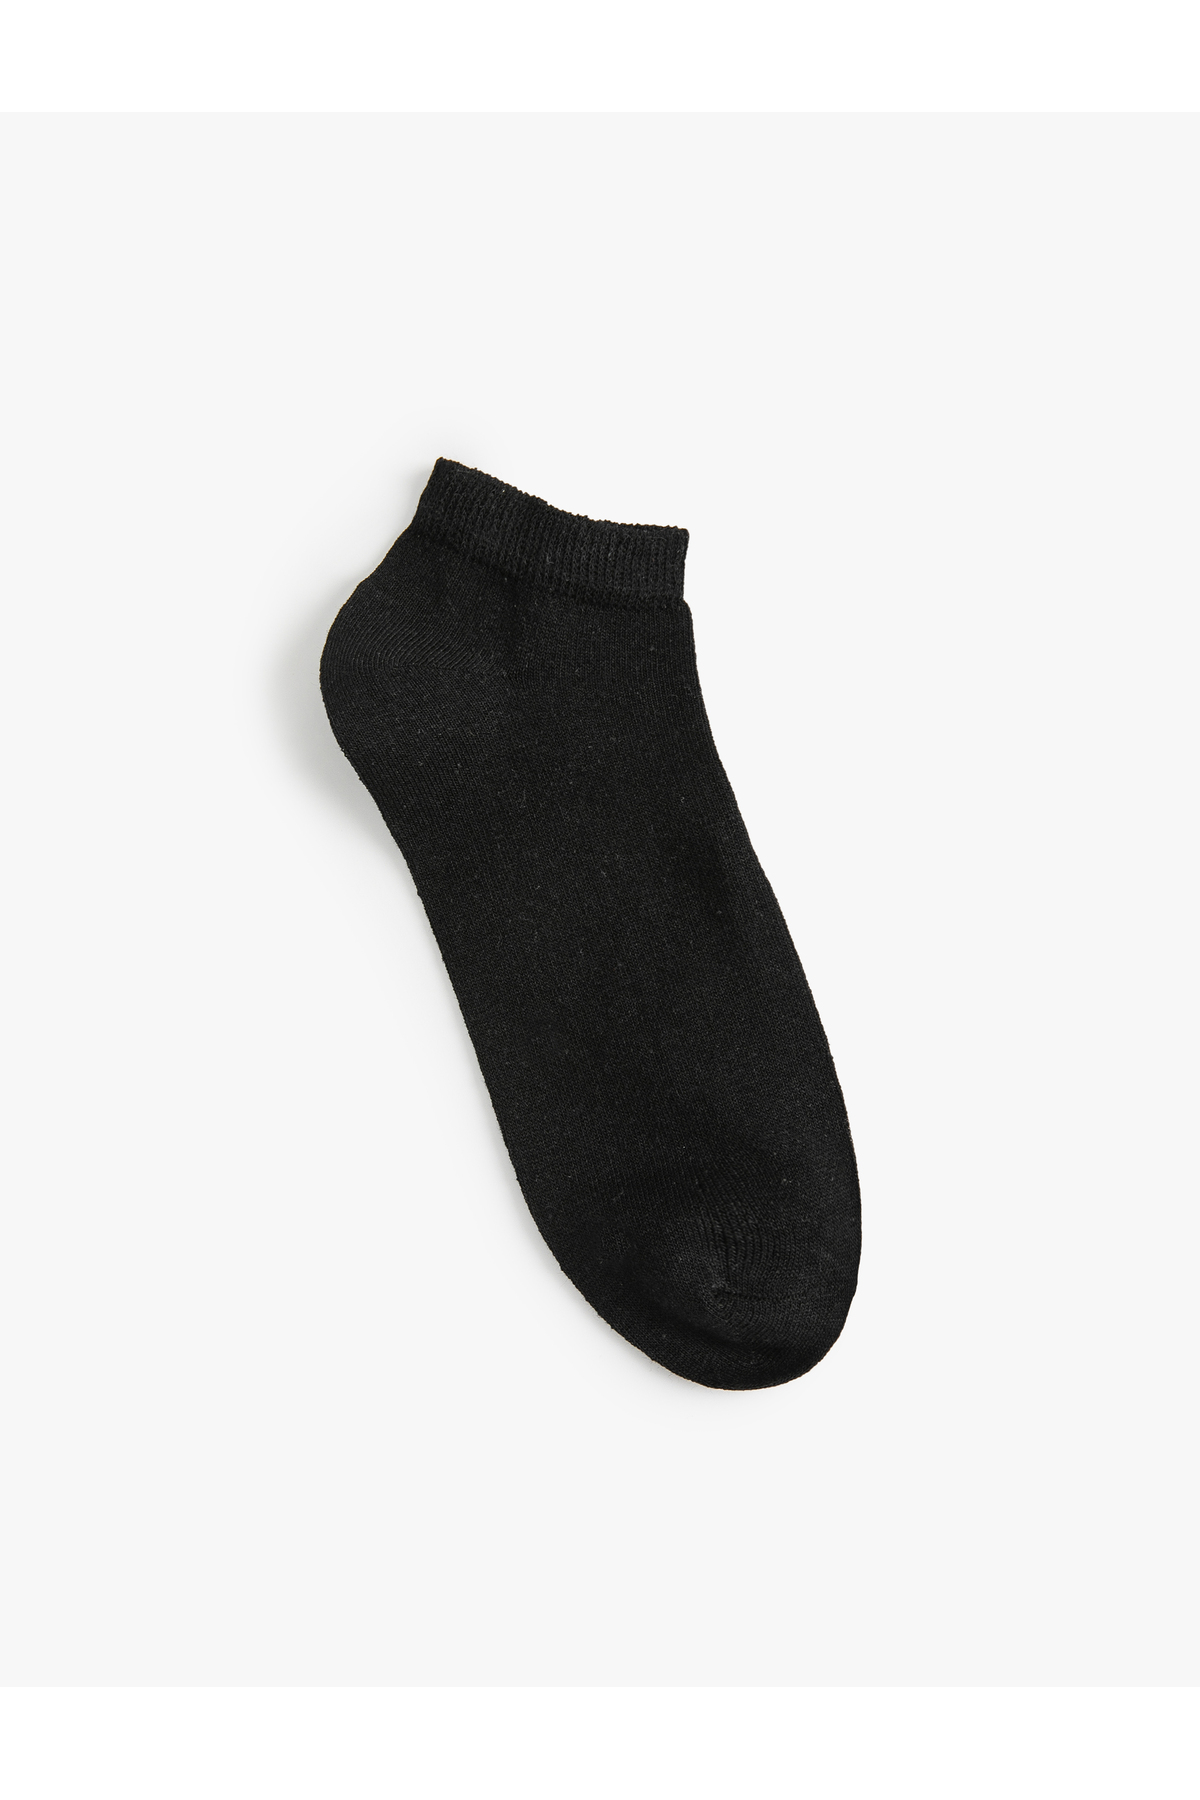 Levně Koton Basic Set of 4 Booties Socks Multi Color